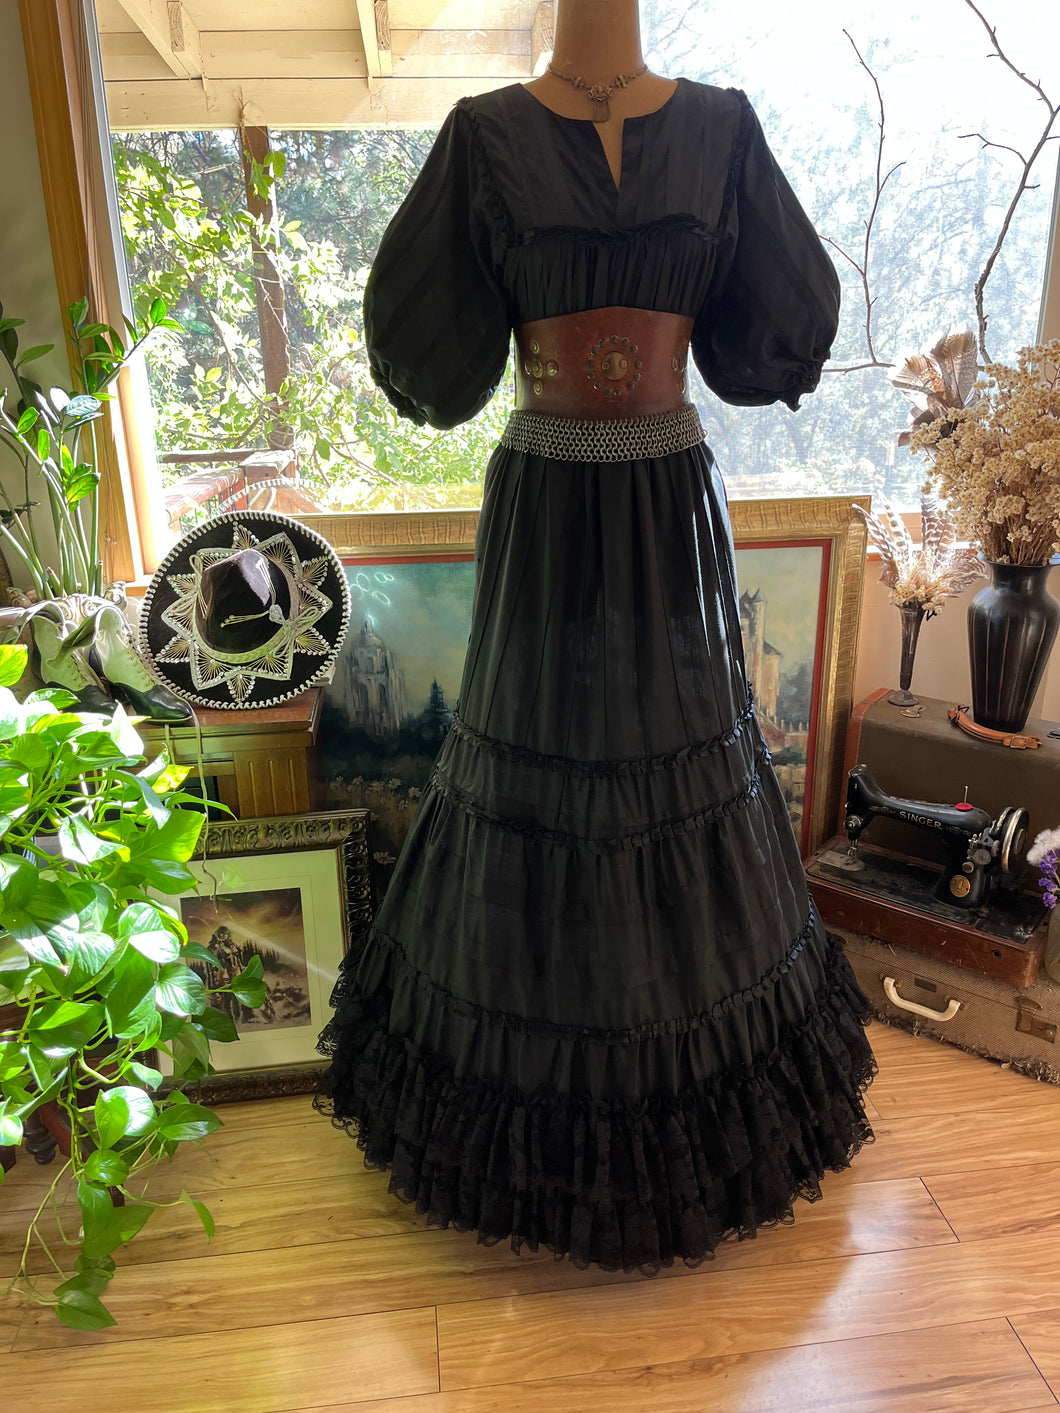 Authentic 1970’s Vintage Black Cotton Ruffle Dress by Fernando Huertas